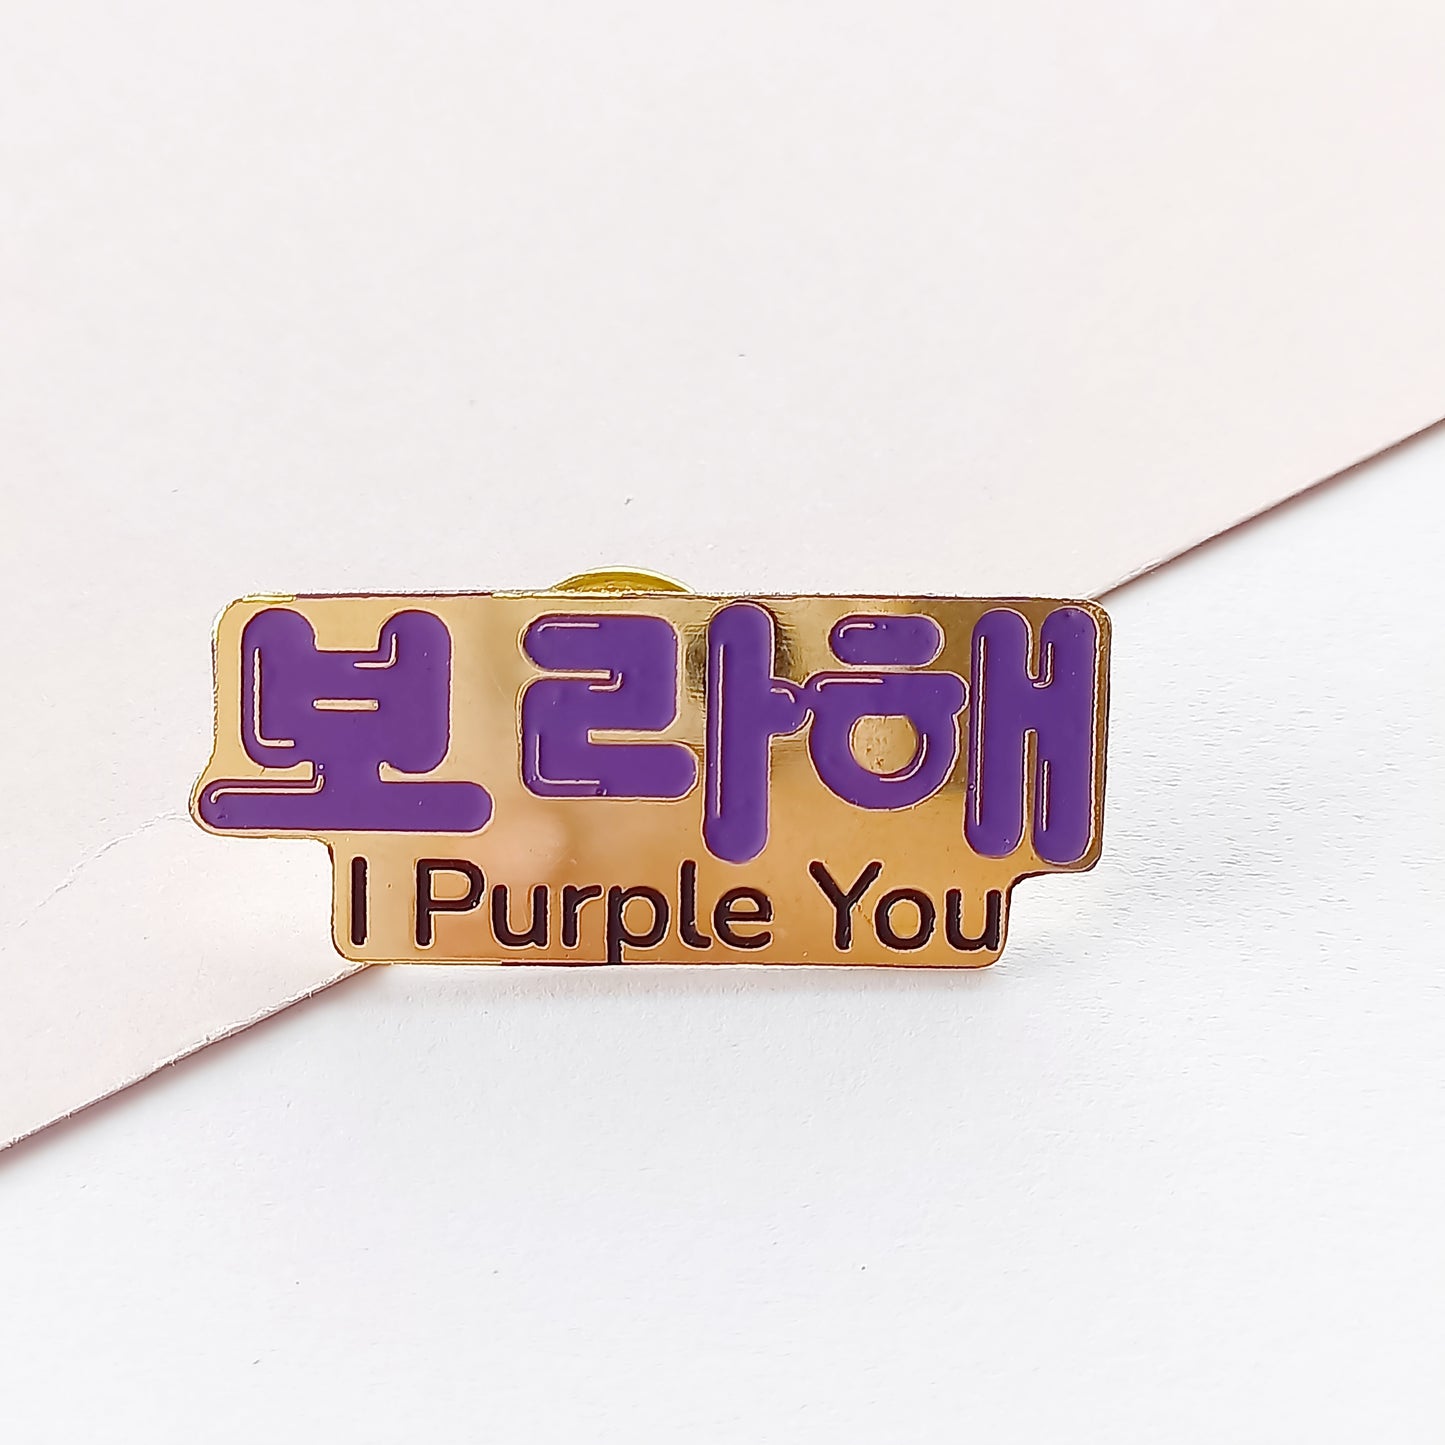 I purple you pin